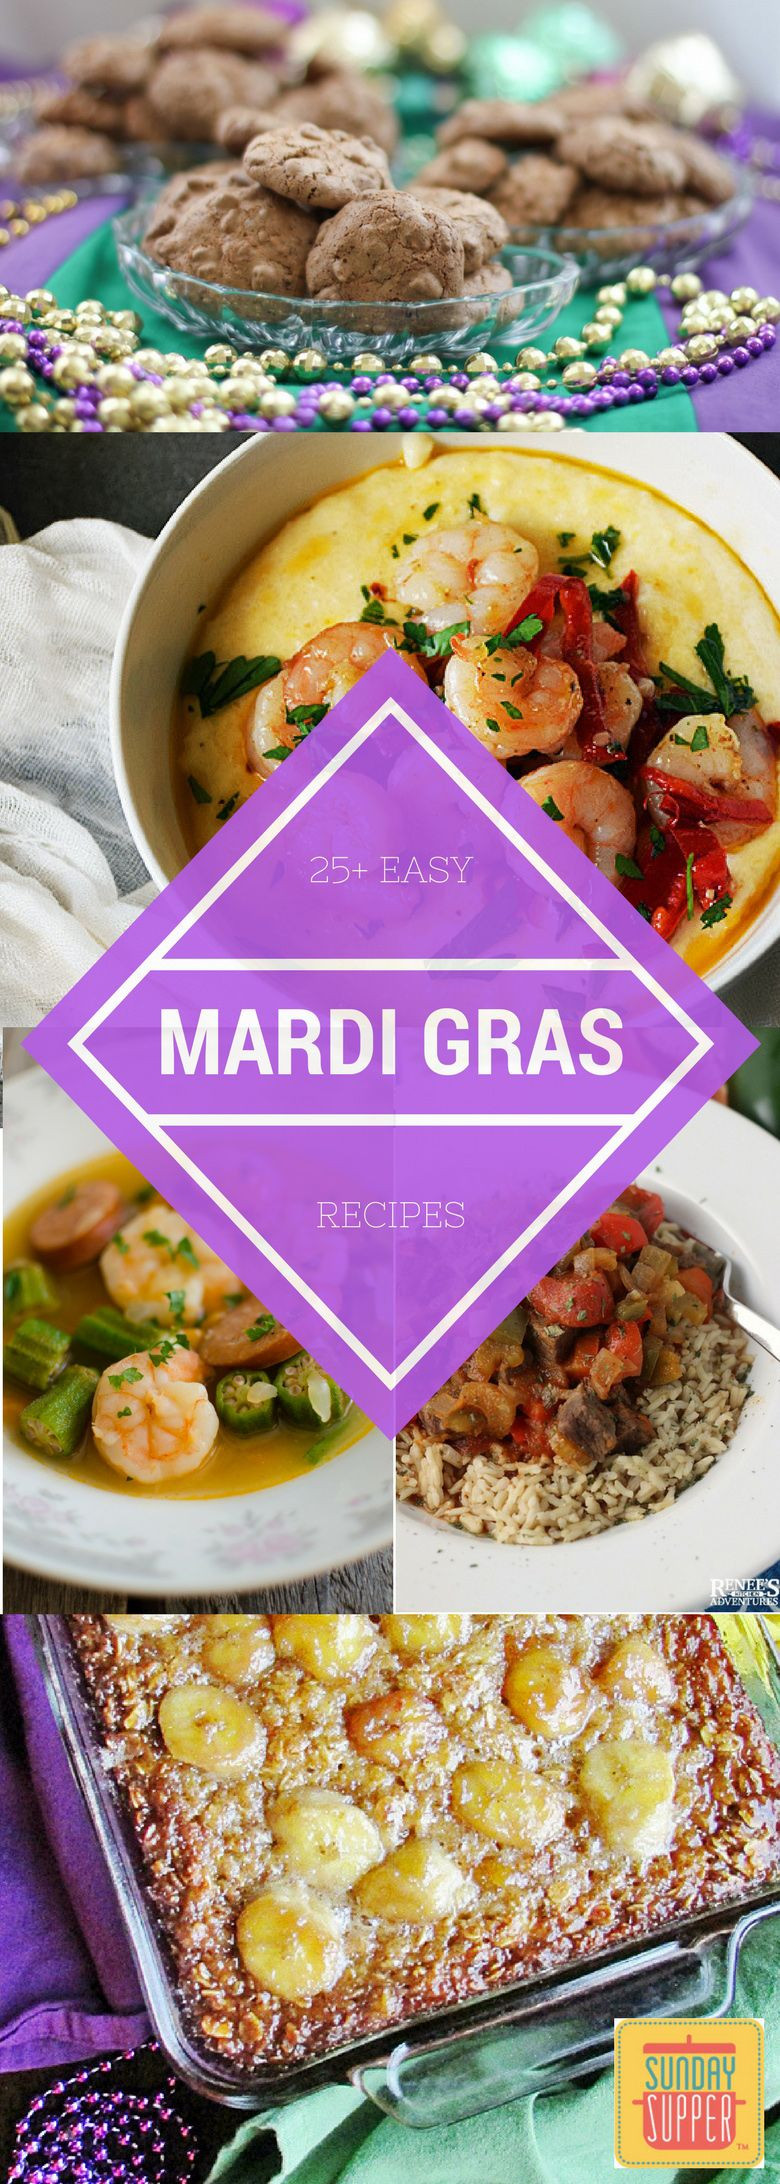 Mardi Gras Side Dishes
 30 Easy Mardi Gras Recipes for SundaySupper